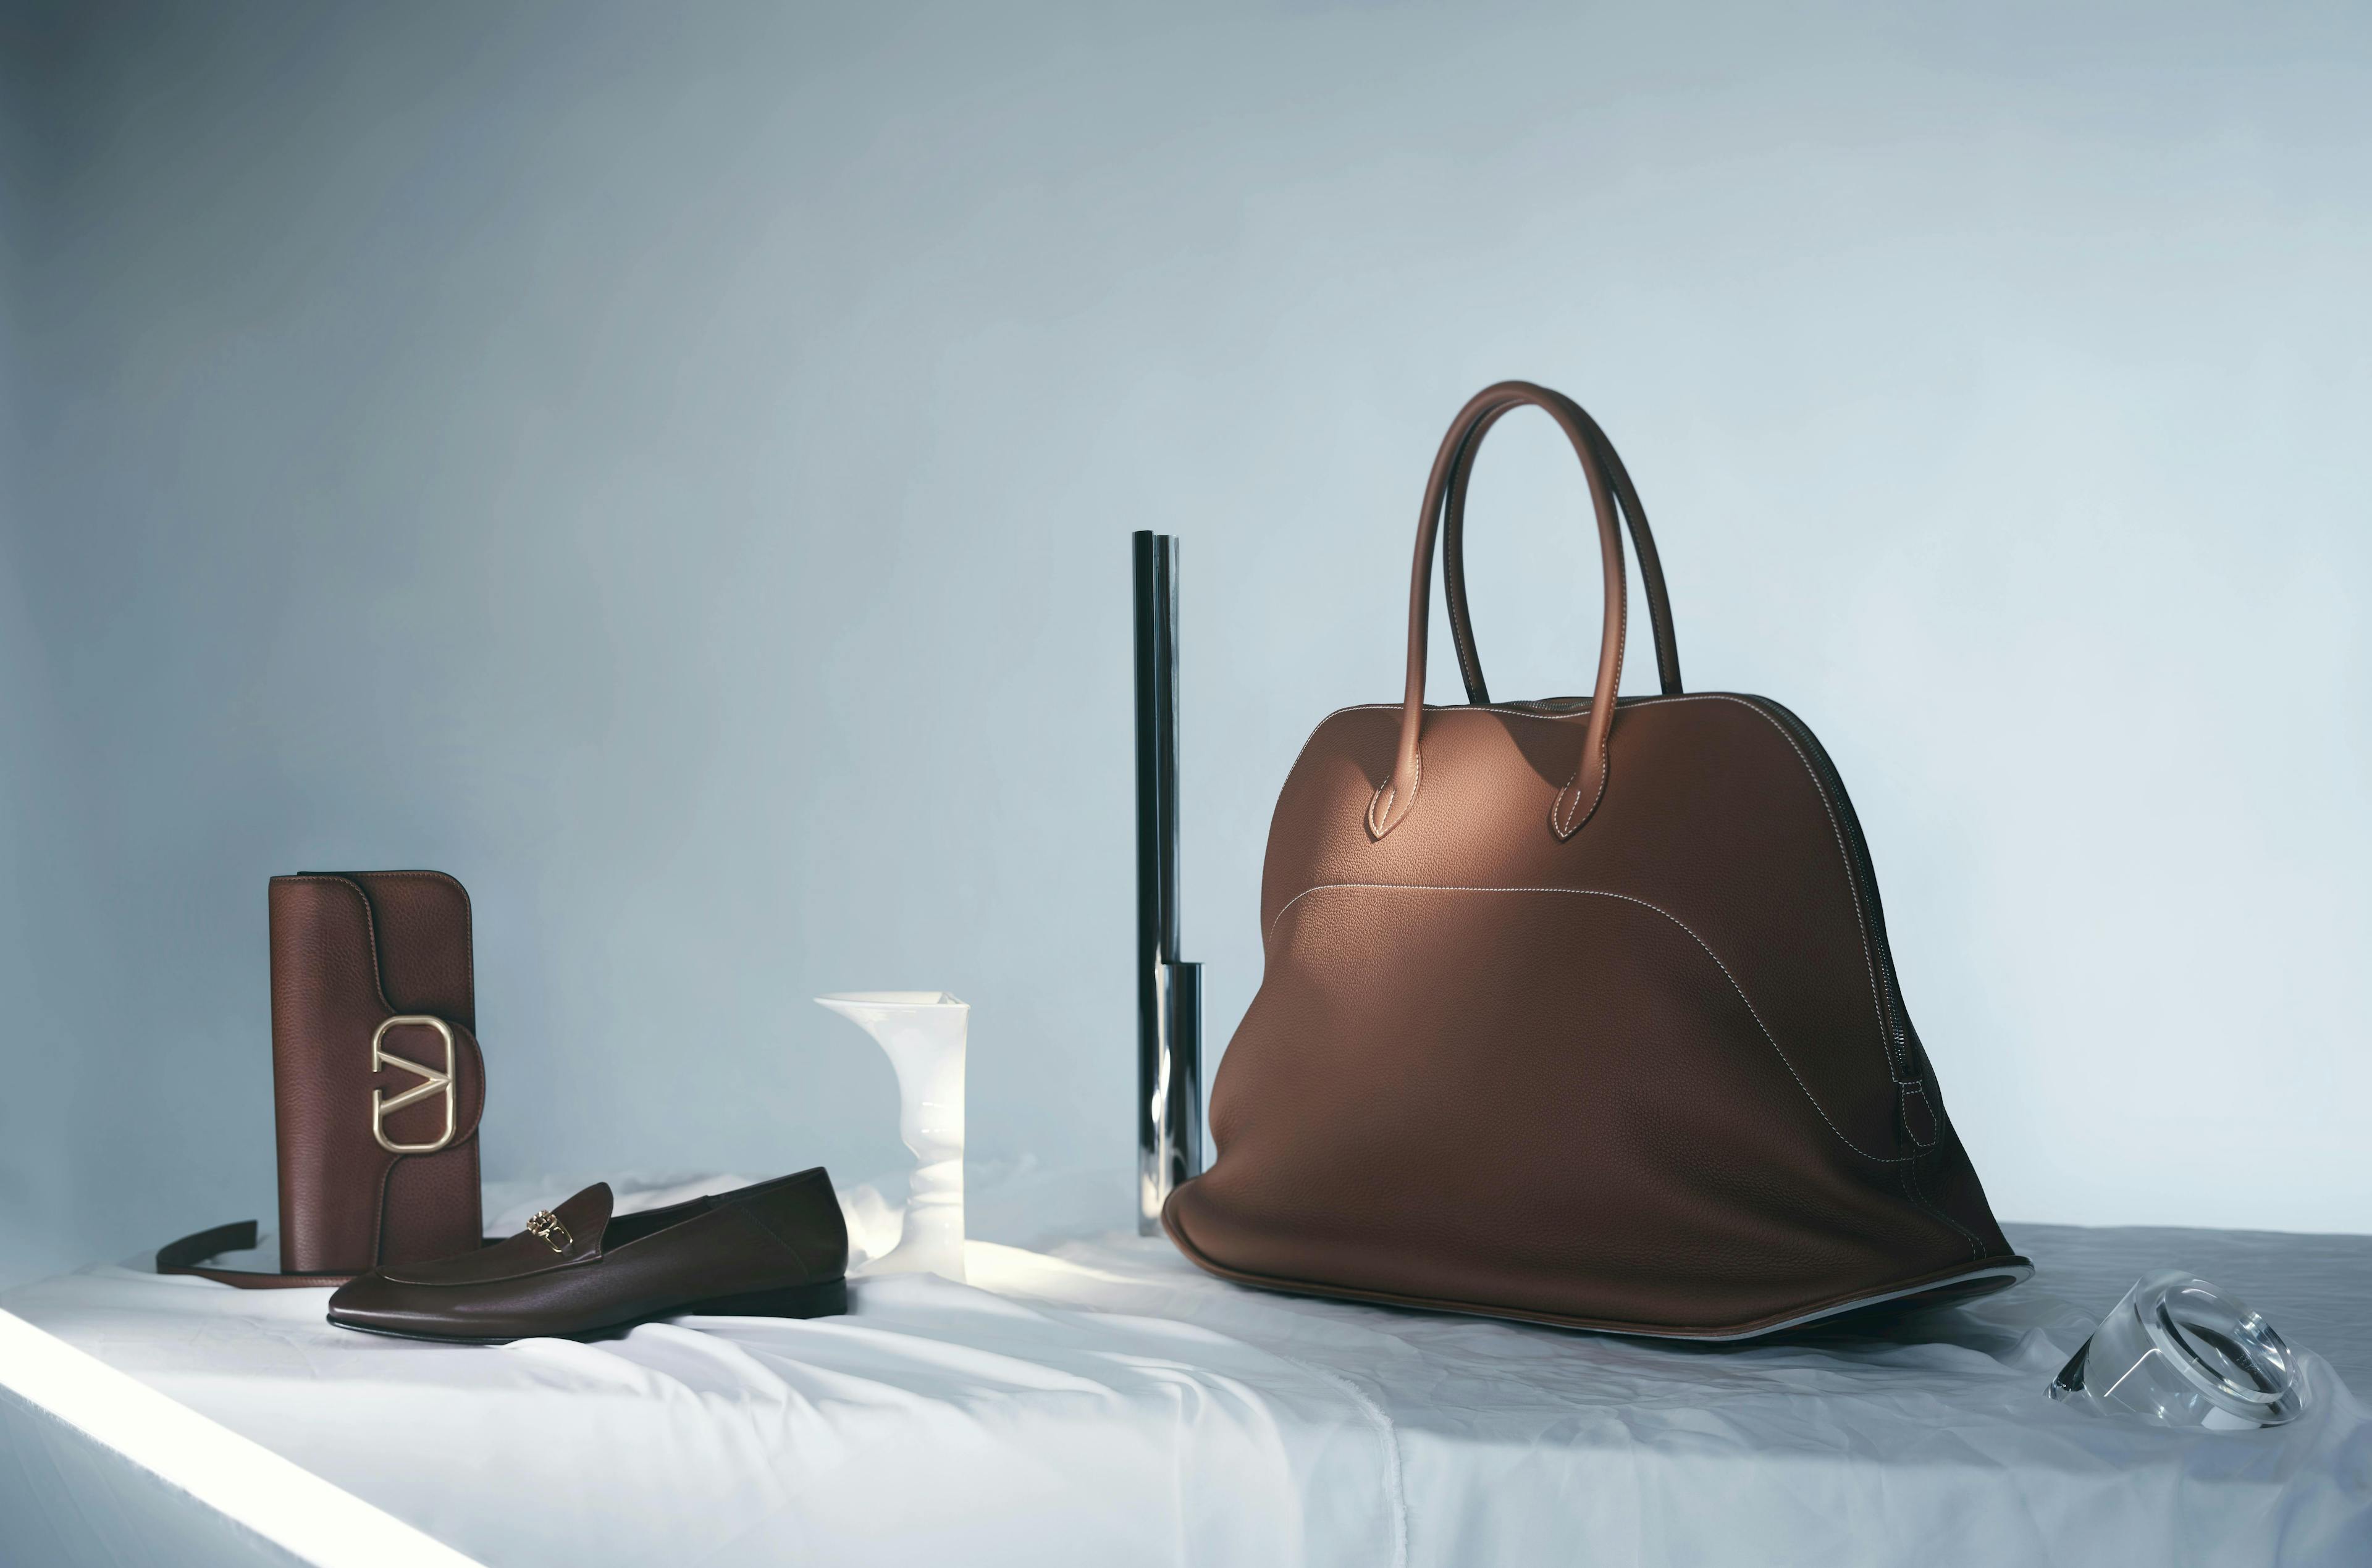 bag clothing apparel handbag accessories accessory